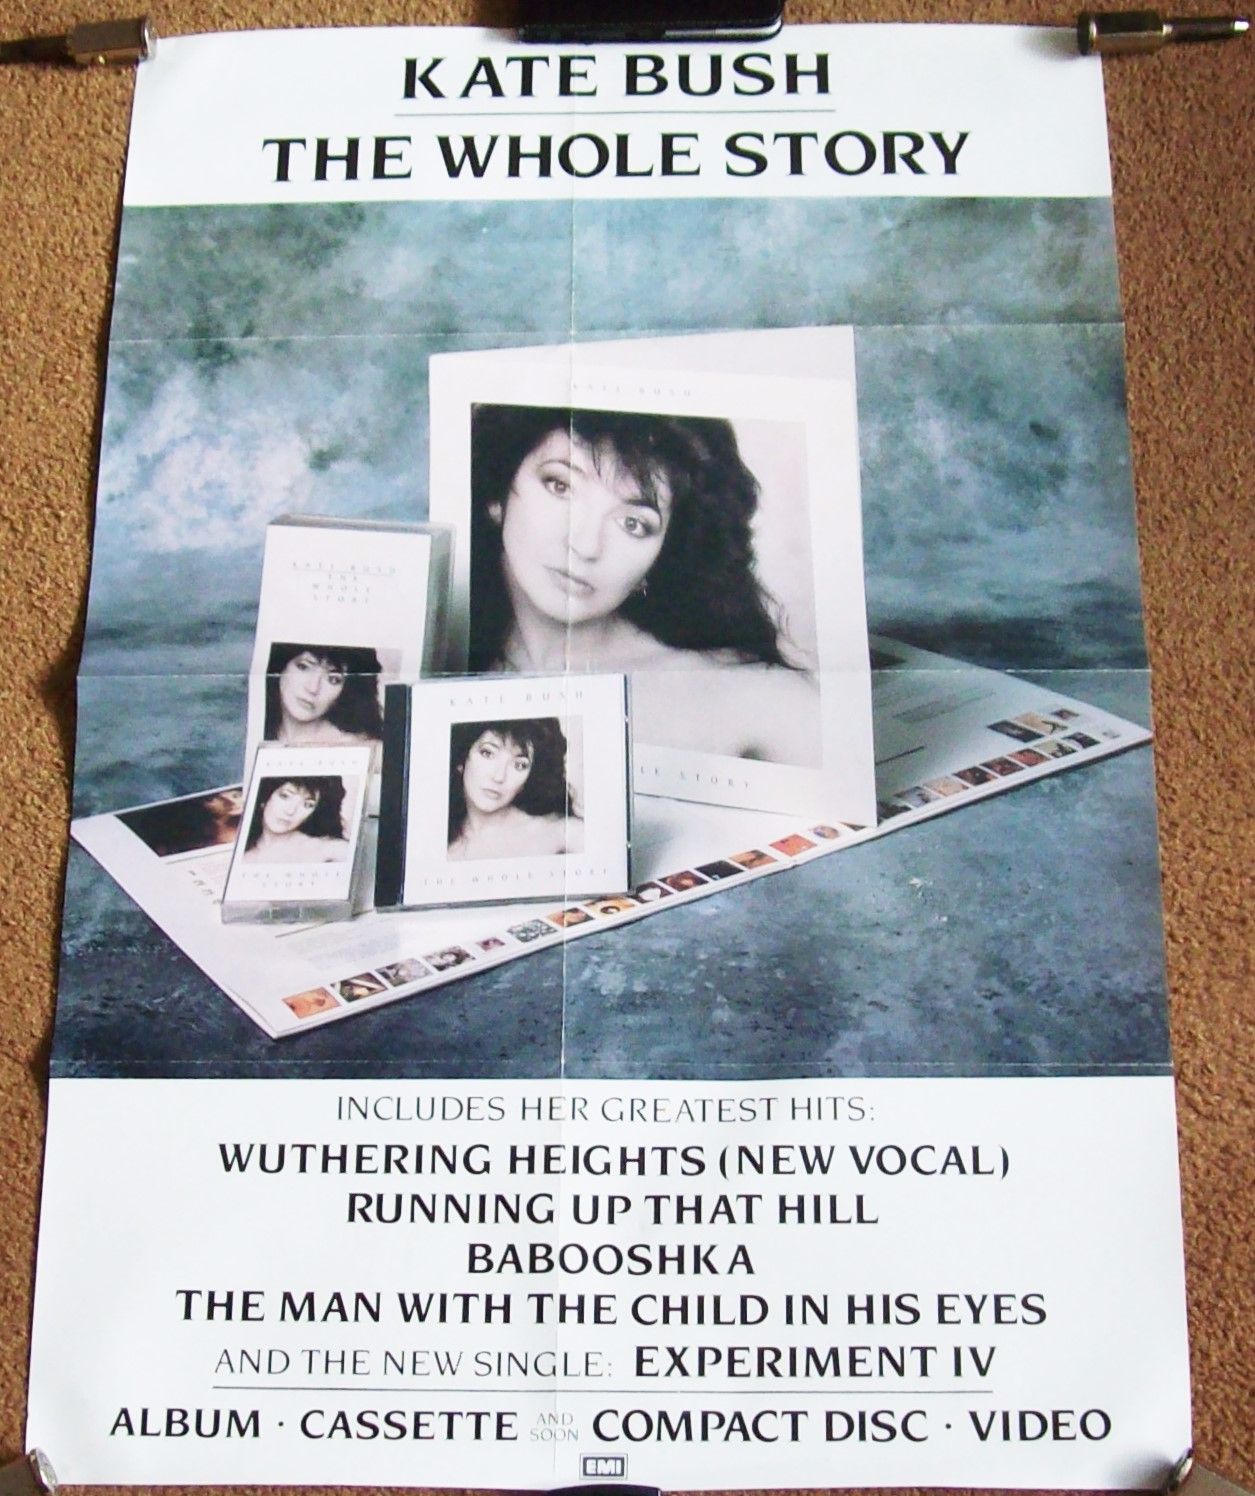 KATE BUSH U.K. RECORD COMPANY PROMO POSTER 'THE WHOLE STORY' COMPILATION ALBUM  1986